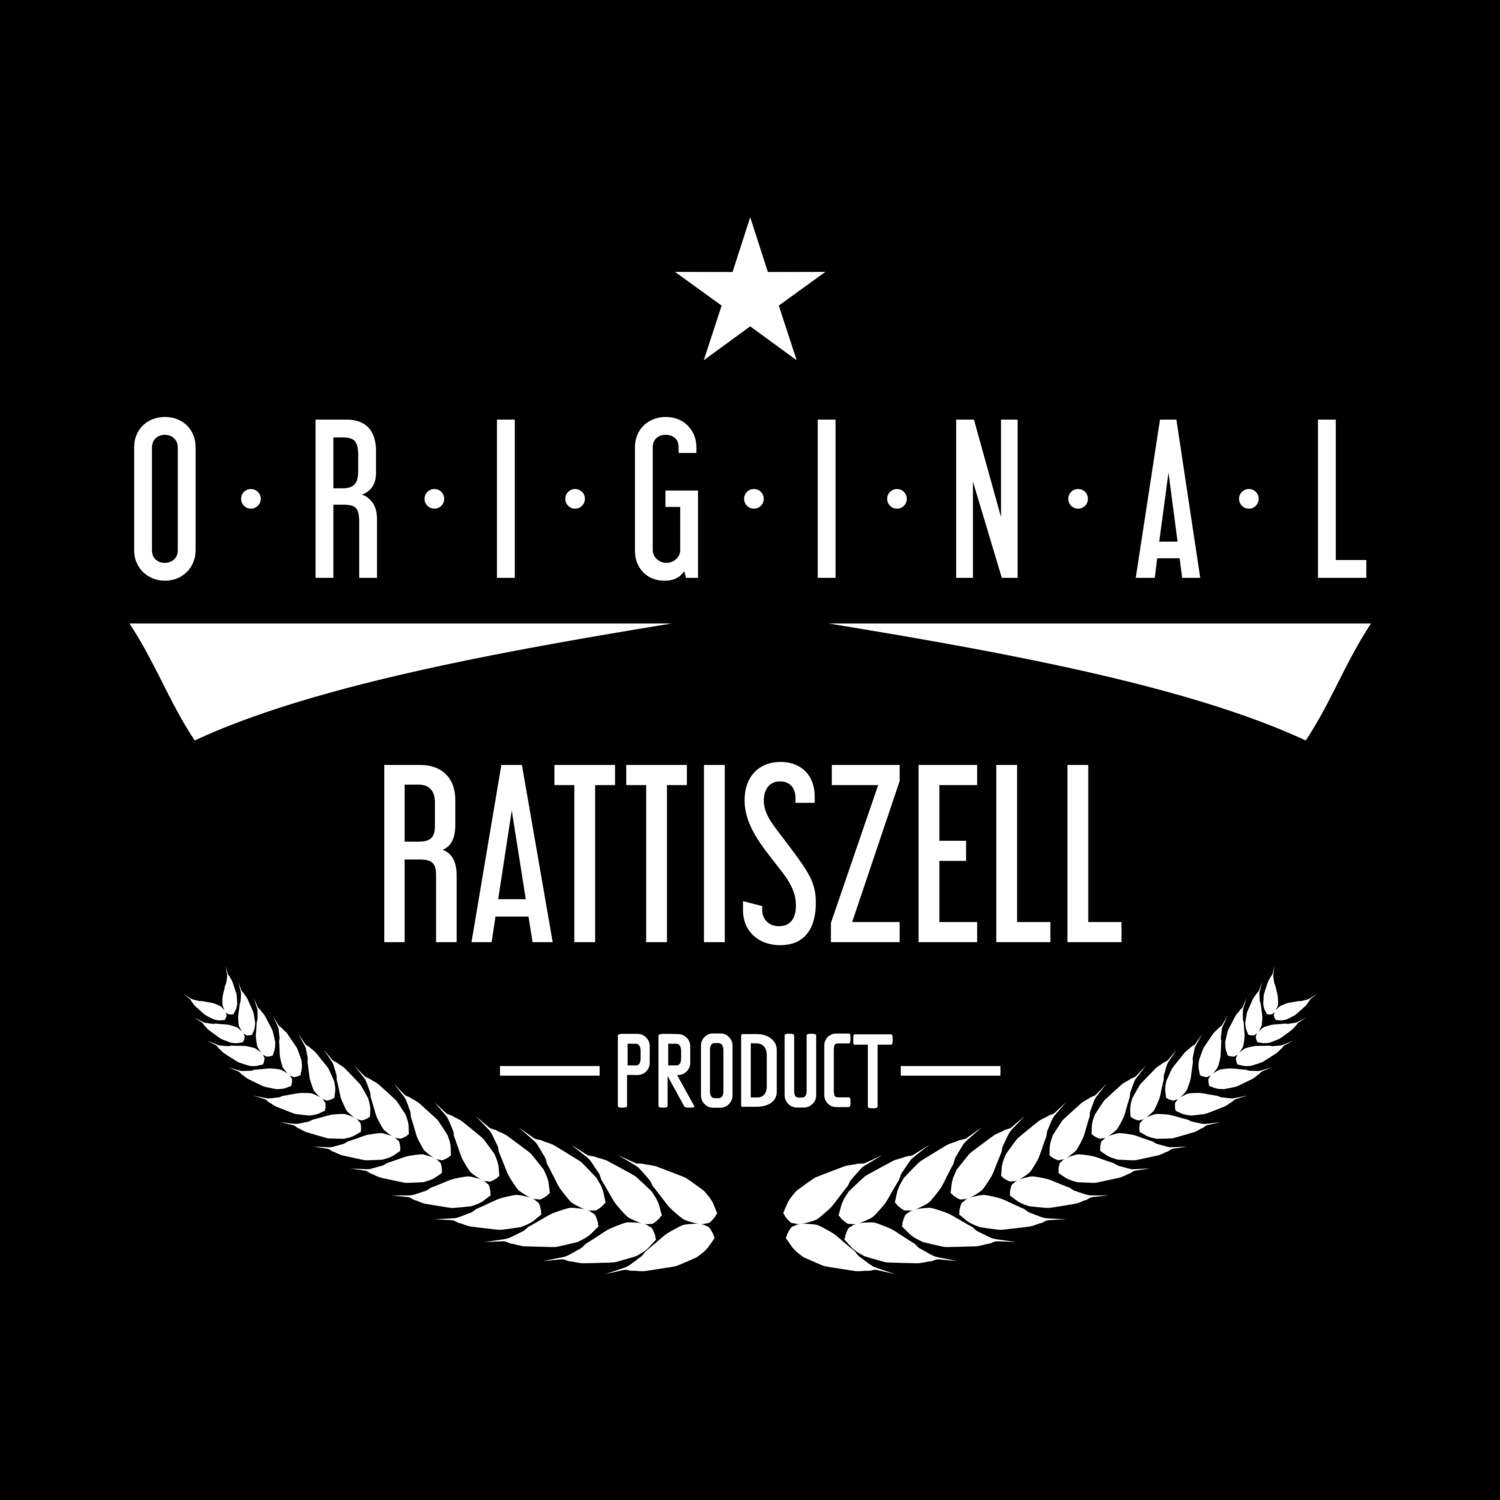 Rattiszell T-Shirt »Original Product«